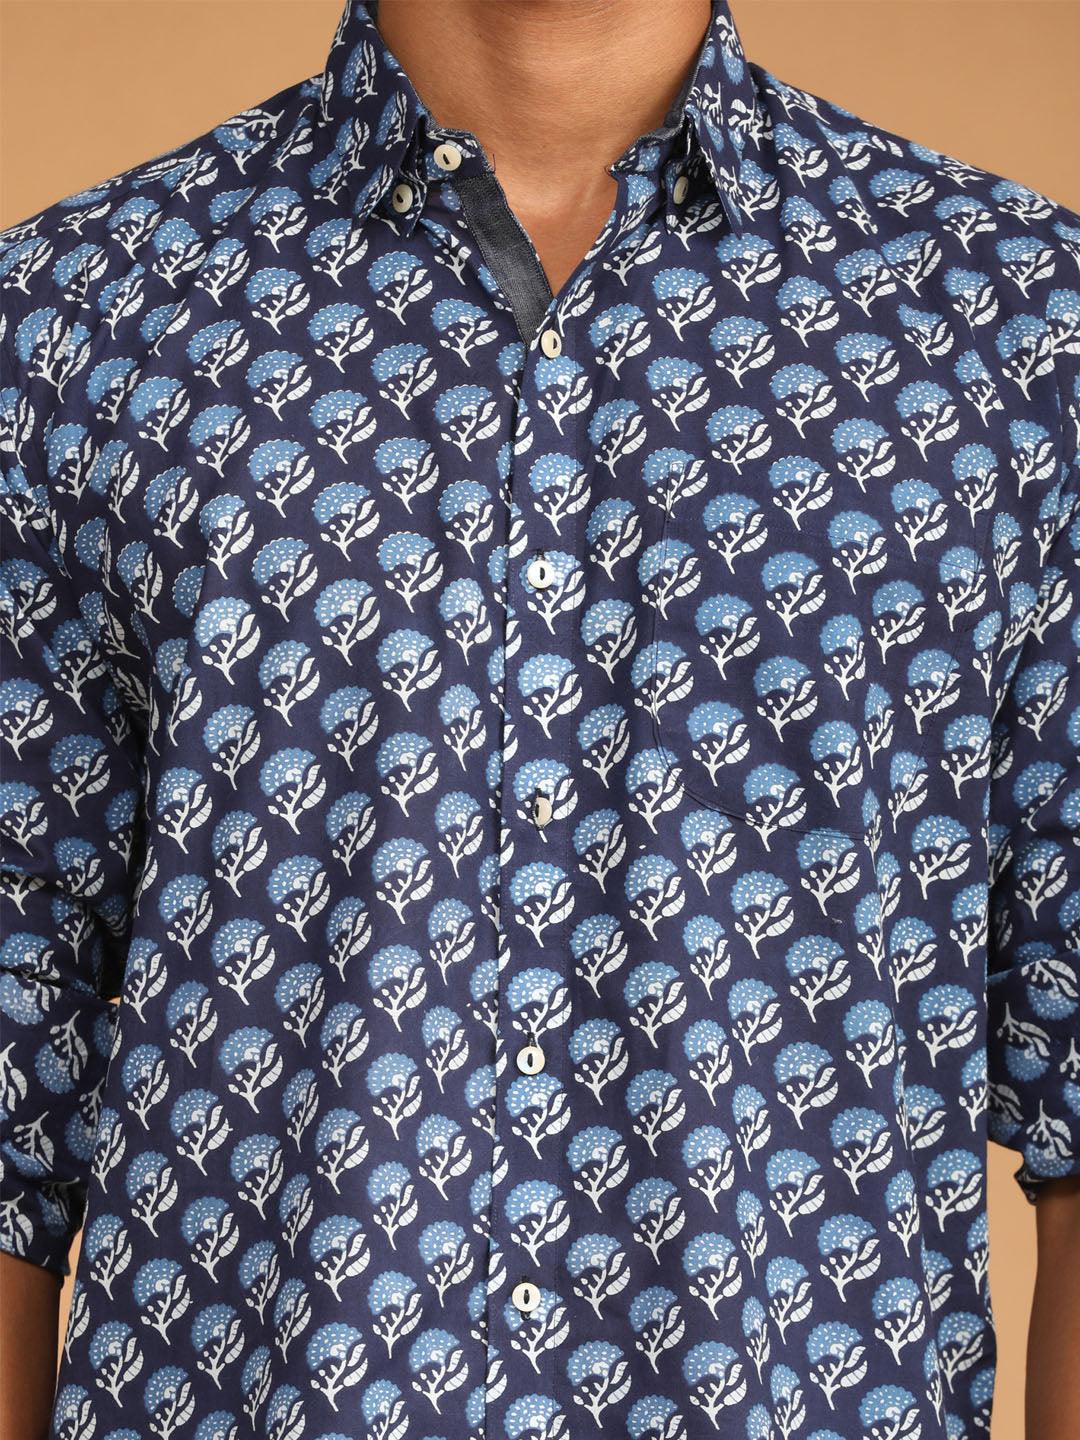 SHVAAS BY VASTRAMAY Men's Blue Printed Shirt - Uboric